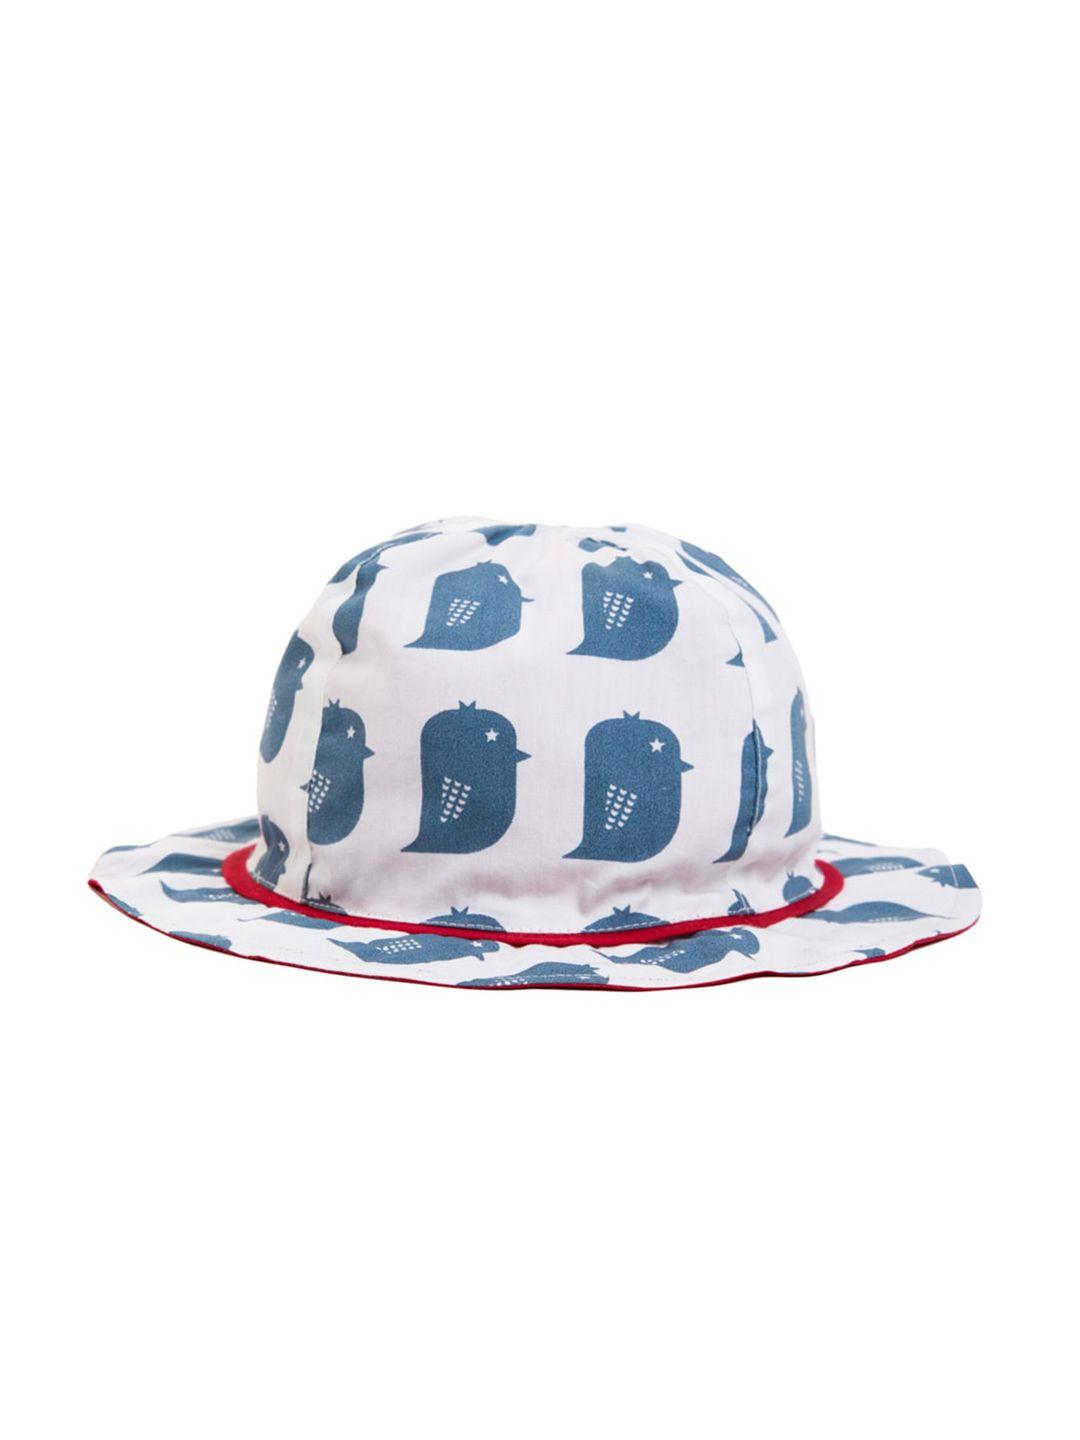 nino-bambino-infant-boys-white-&-blue-printed-organic-cotton-crown-hat